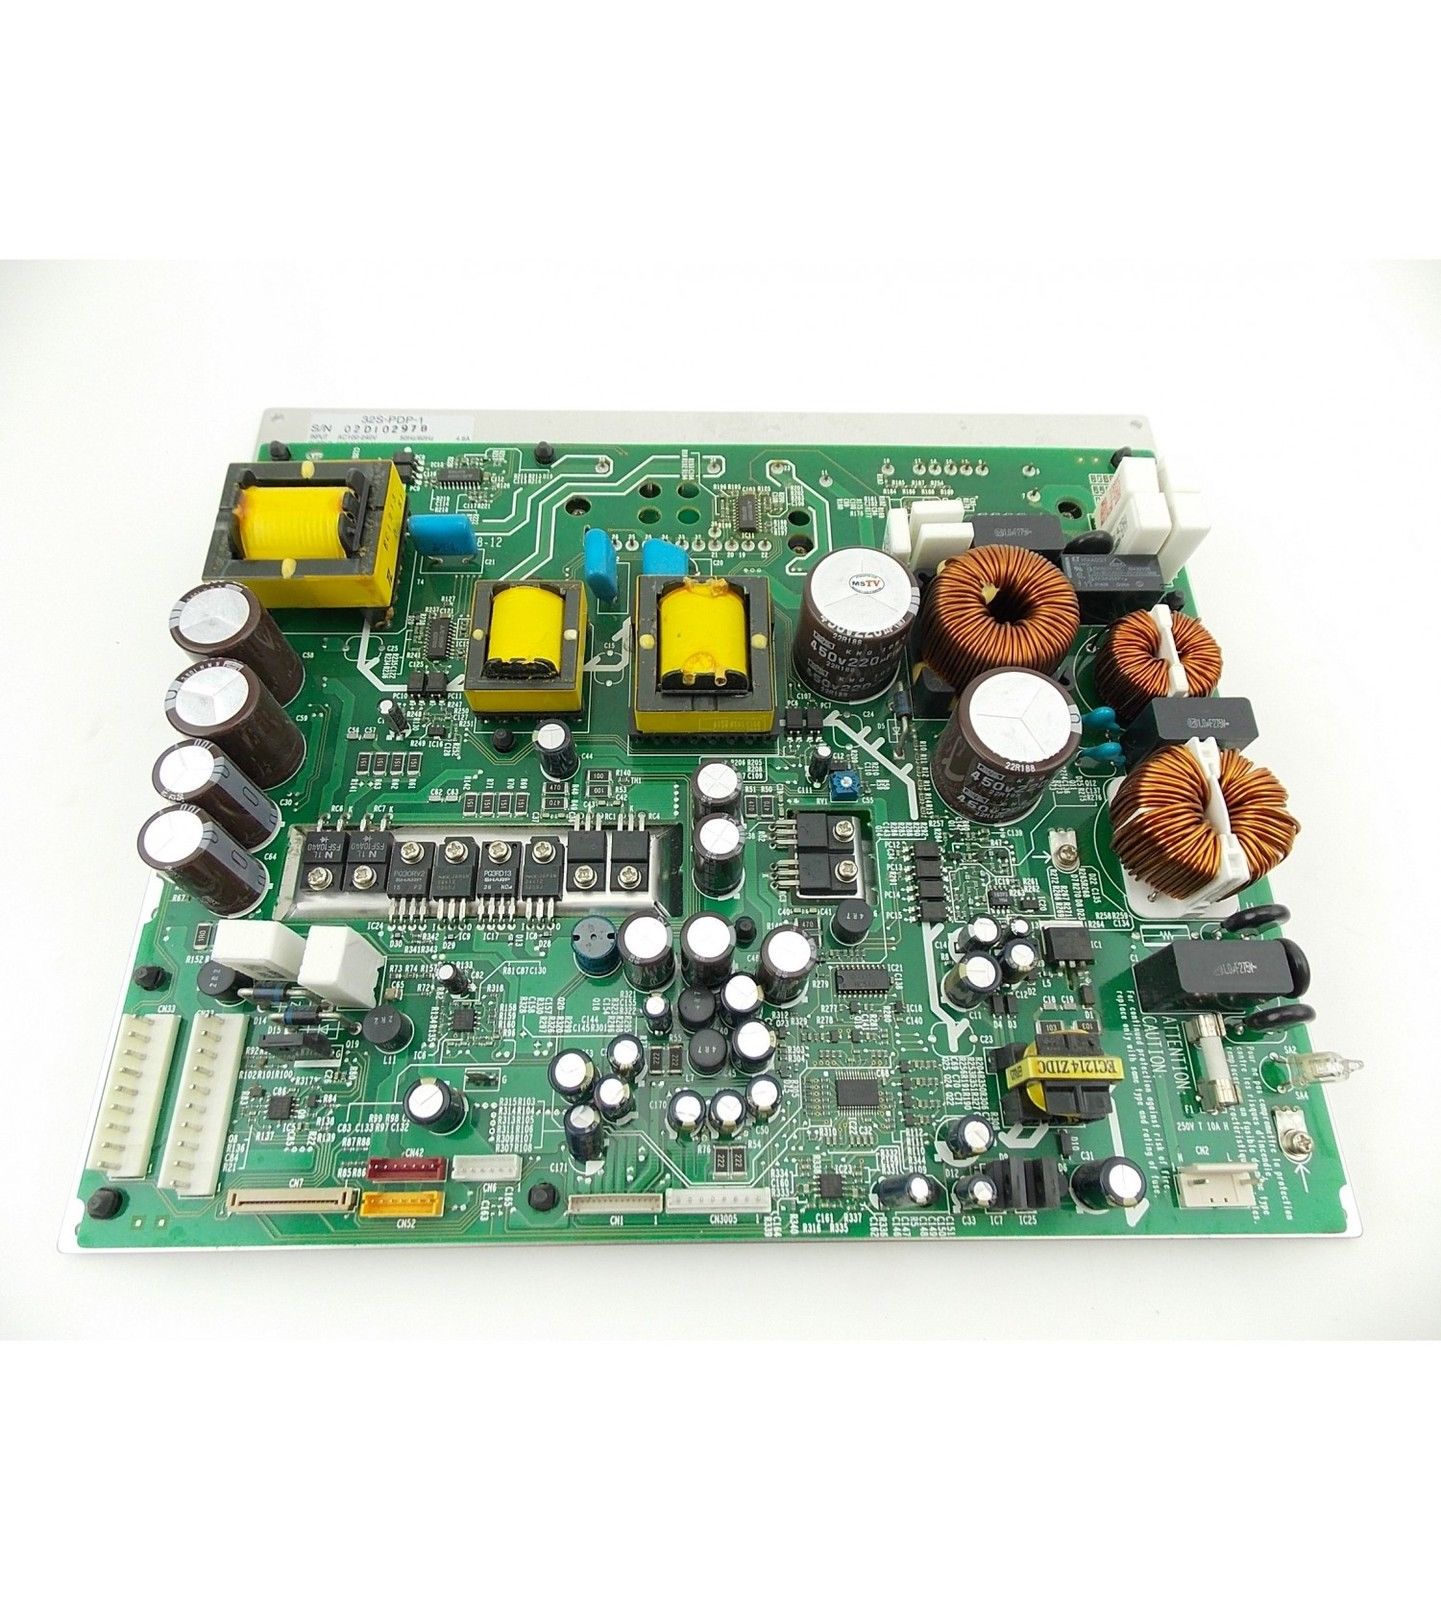 Sony KZ-32TS1U Power Supply PKG-1859 1-468-658-11